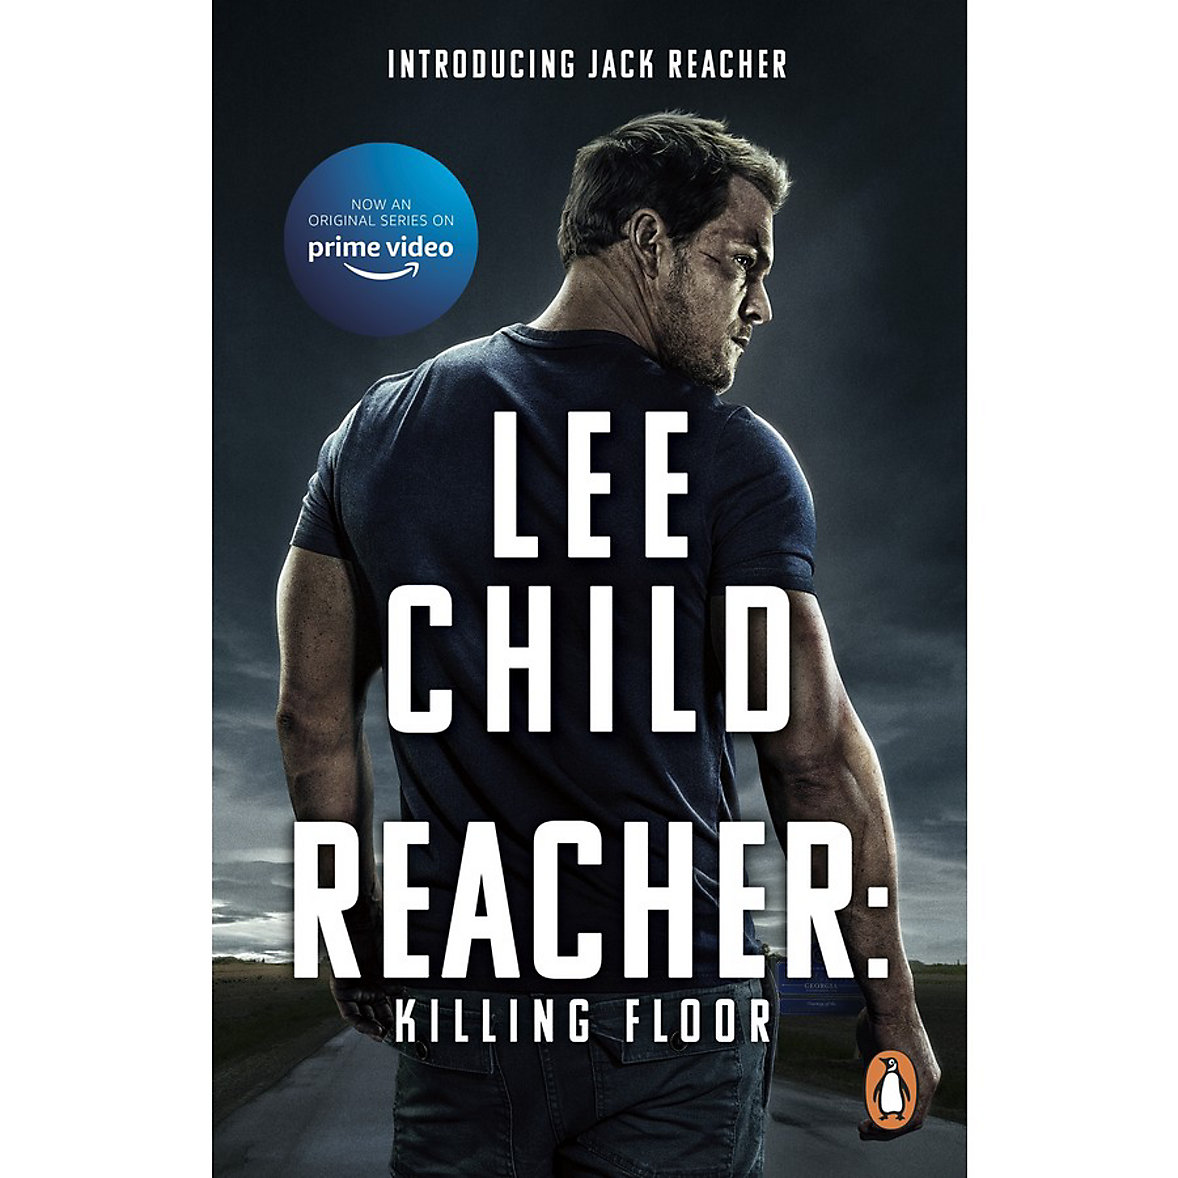 Jack Reacher: Killing Floor by Lee Child